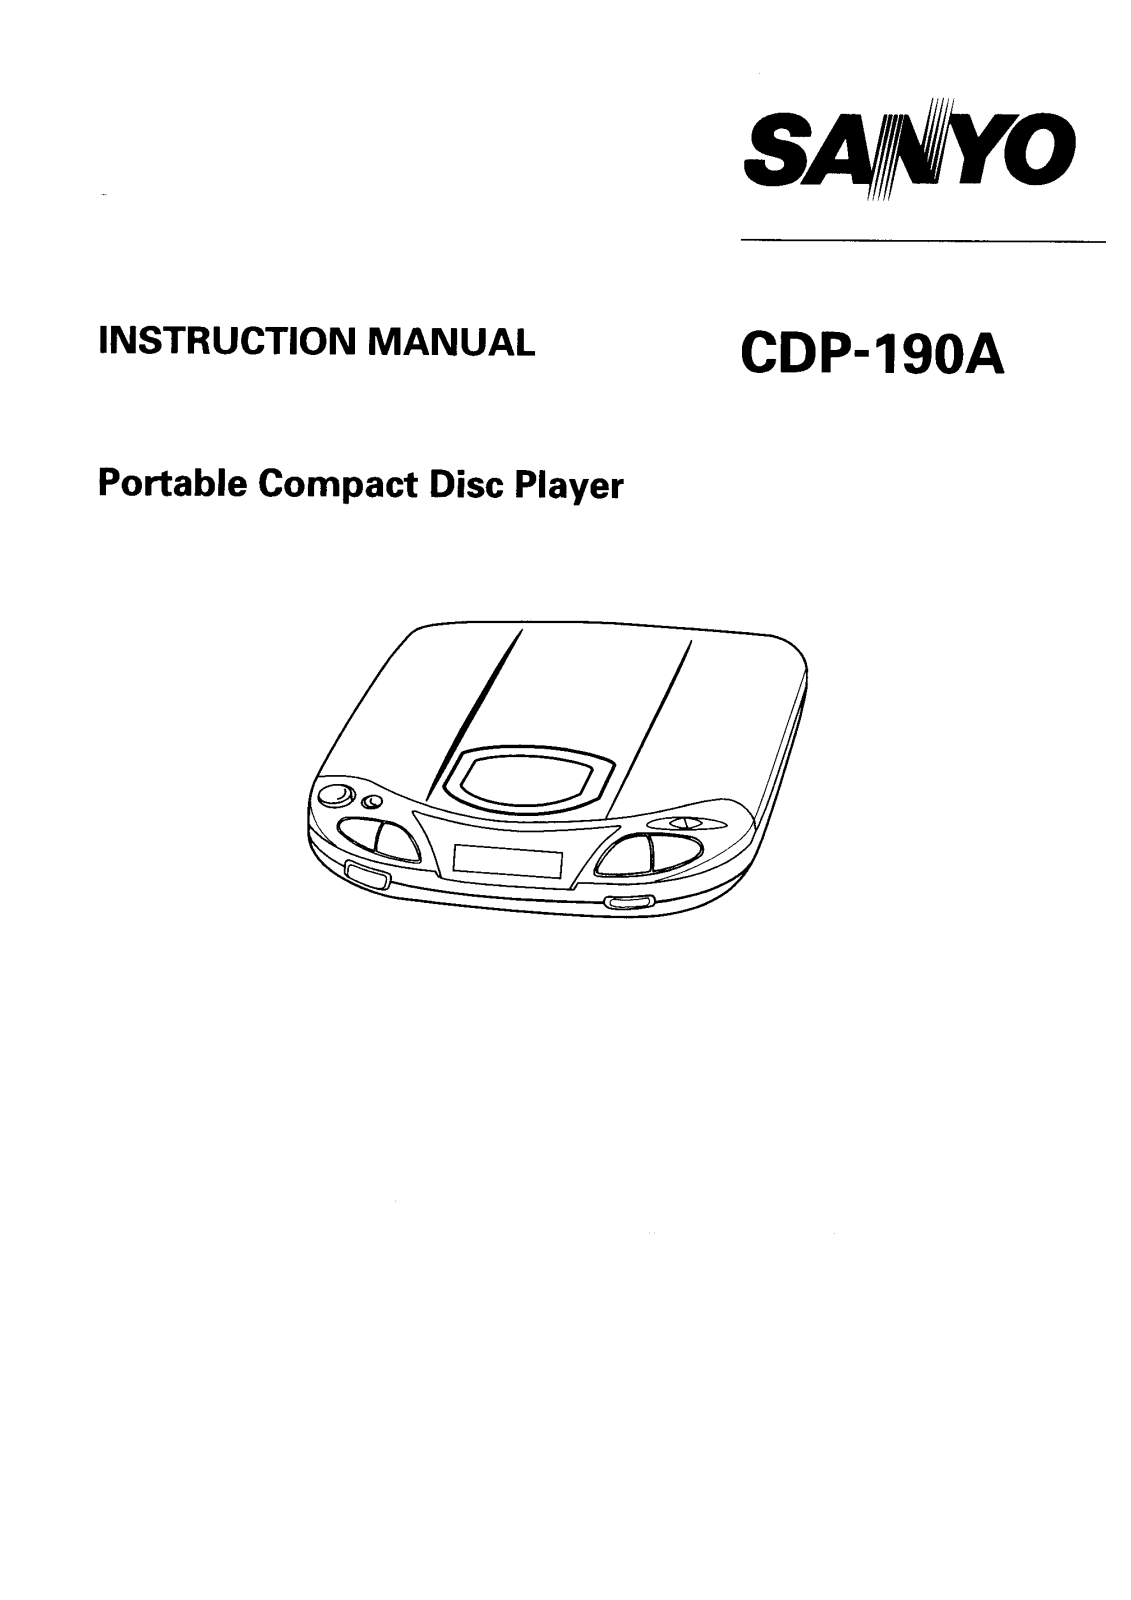 Sanyo CDP-190A Instruction Manual